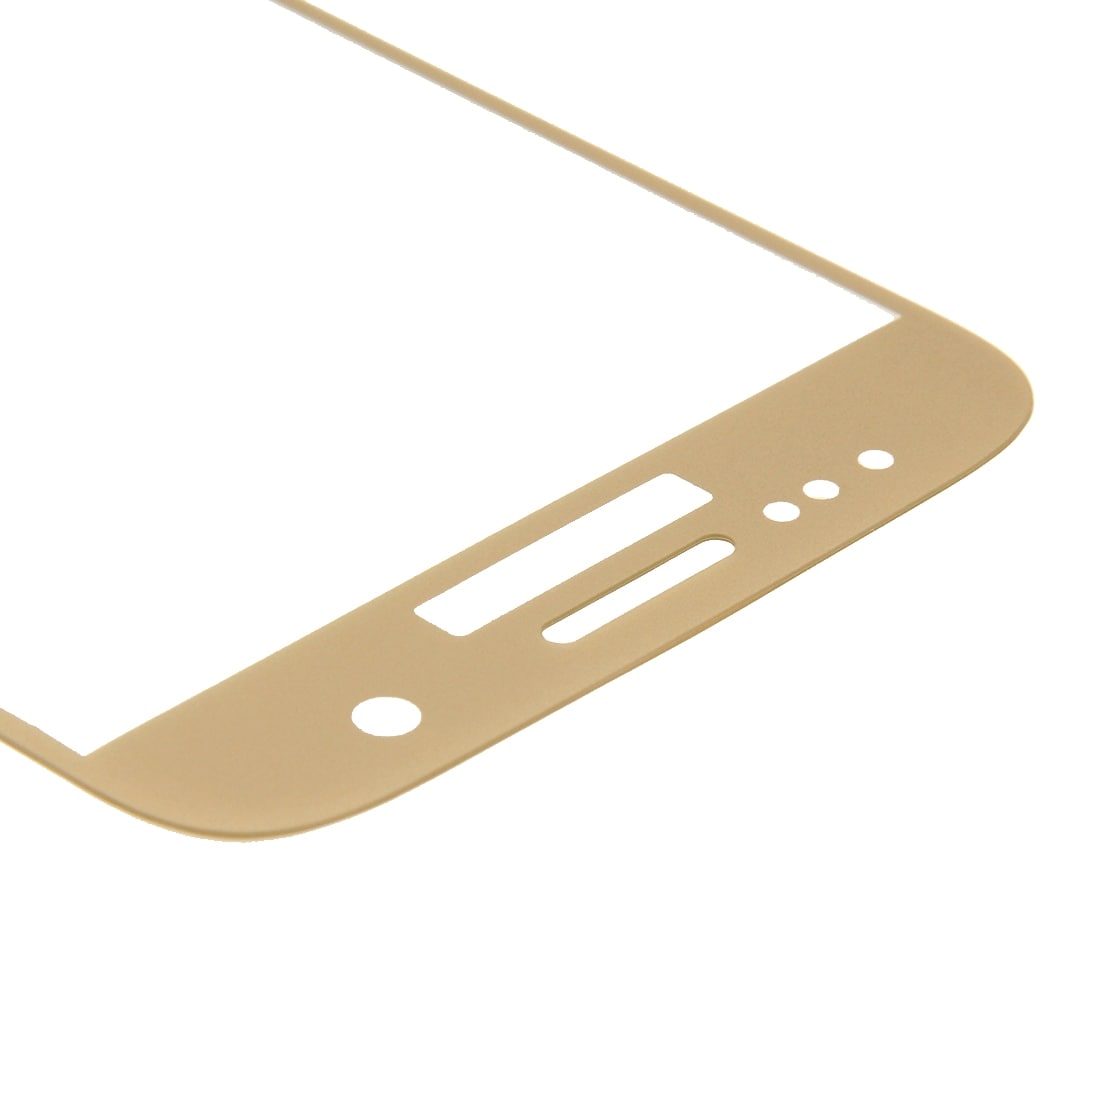 Glasskydd till Samsung Galaxy S7 - Guld